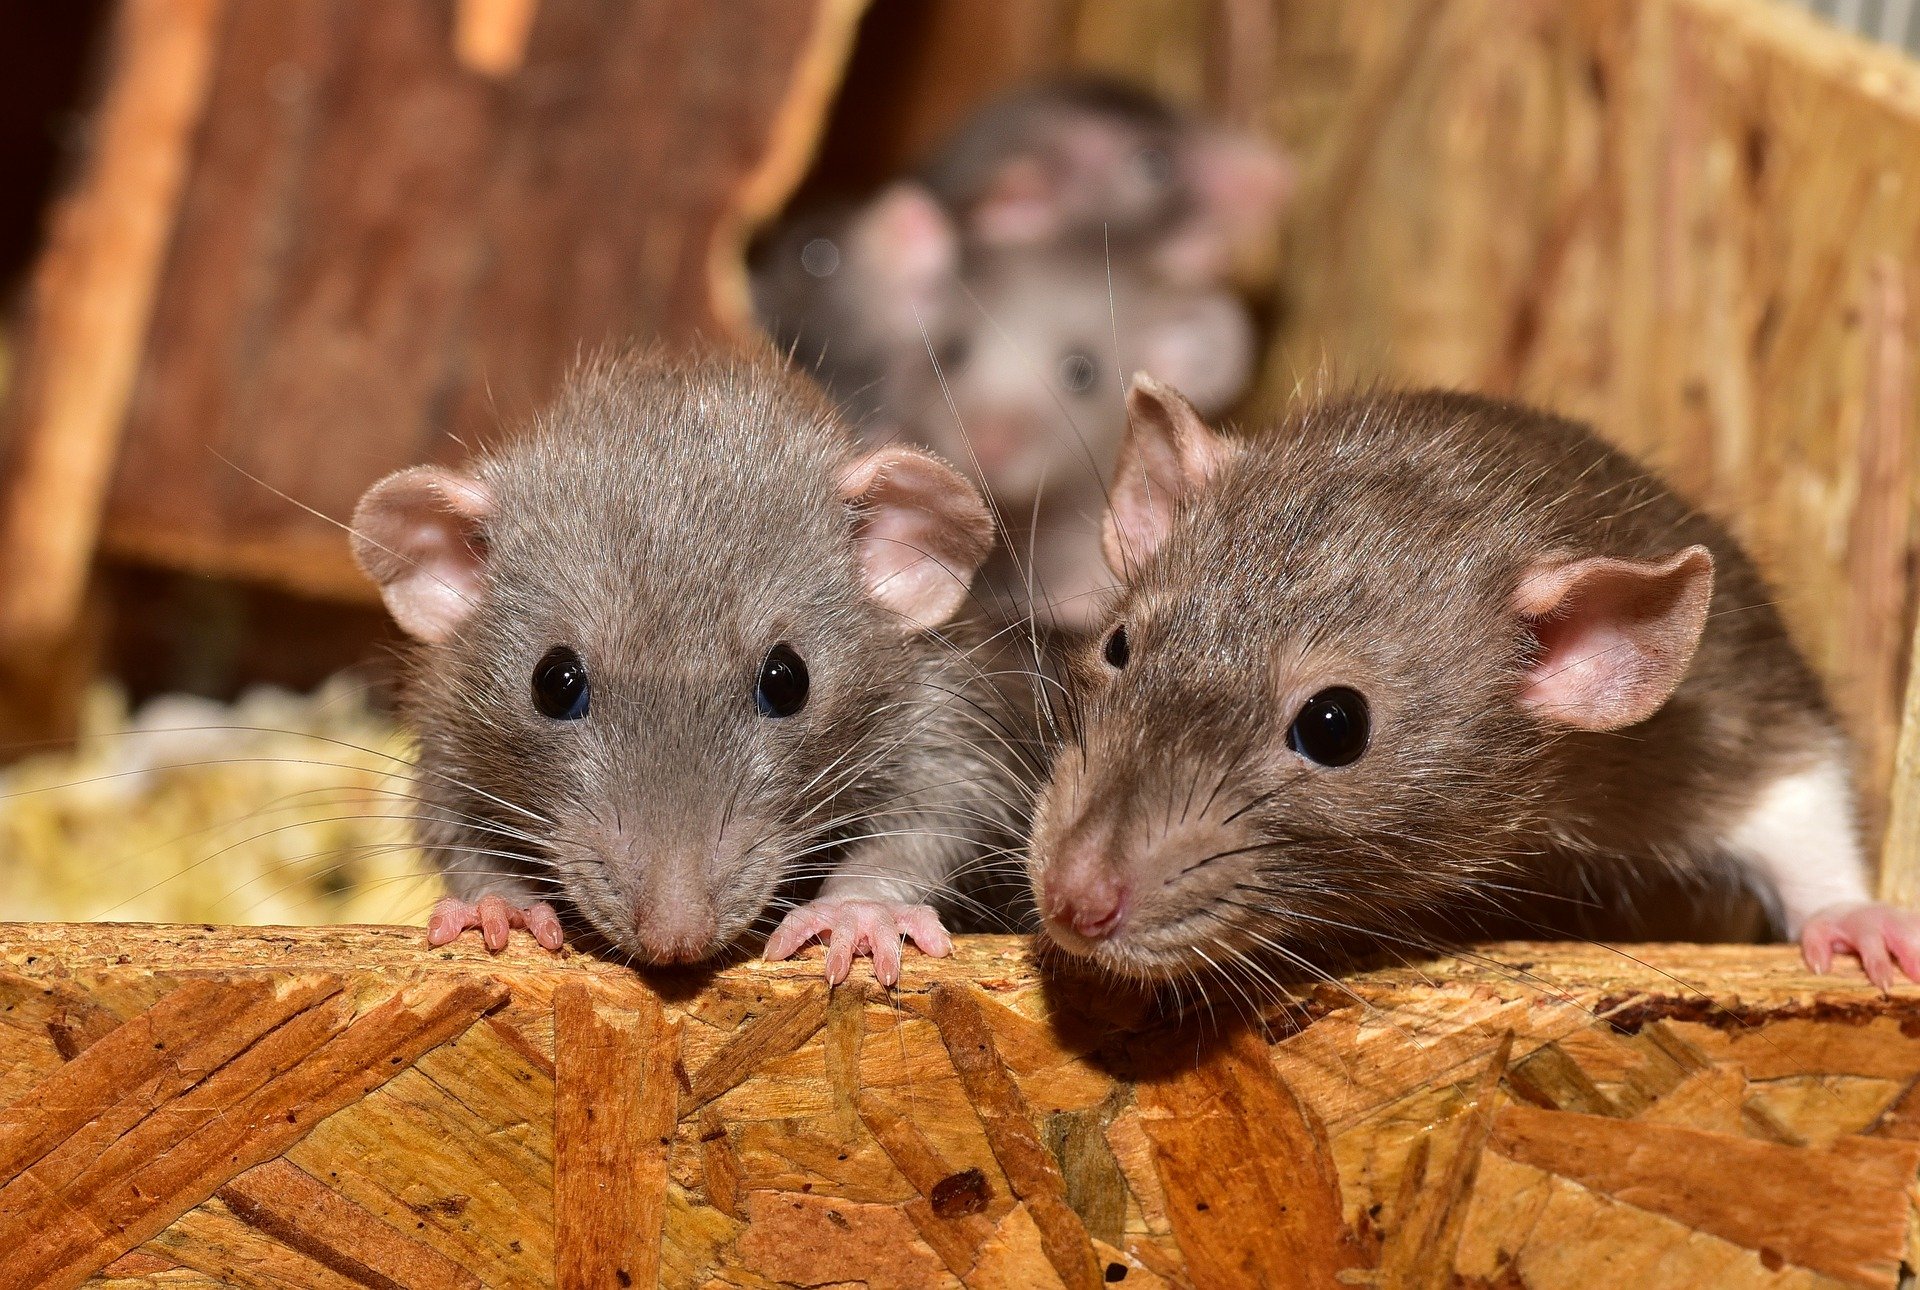 A close-up image of some gray rats | Photo: Pixabay/sipa